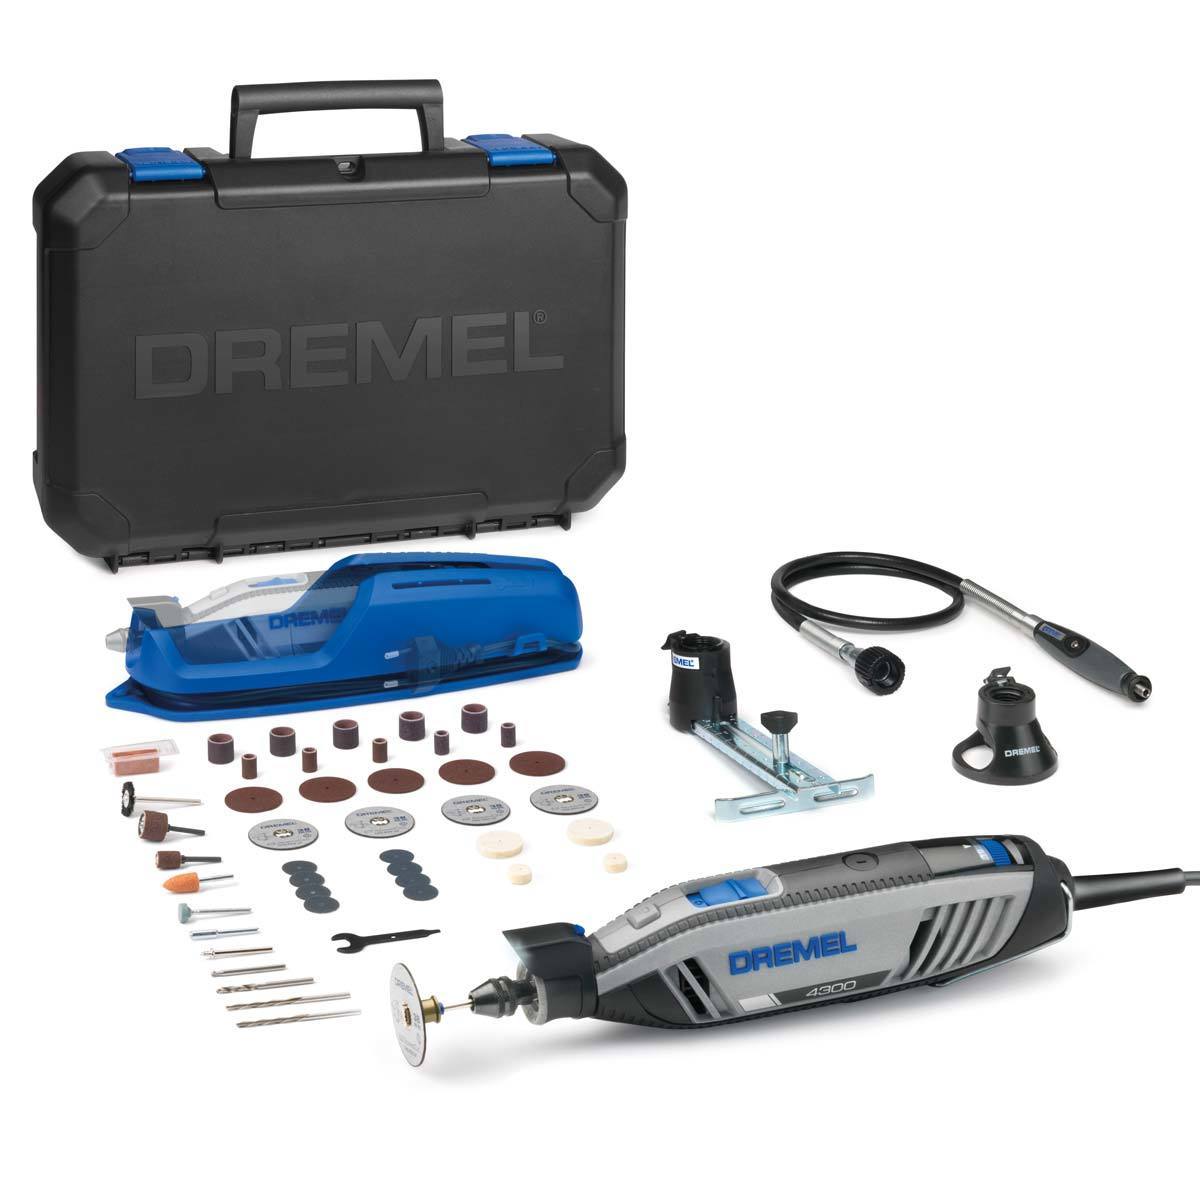 Dremel 4300 Review - Tool Box One